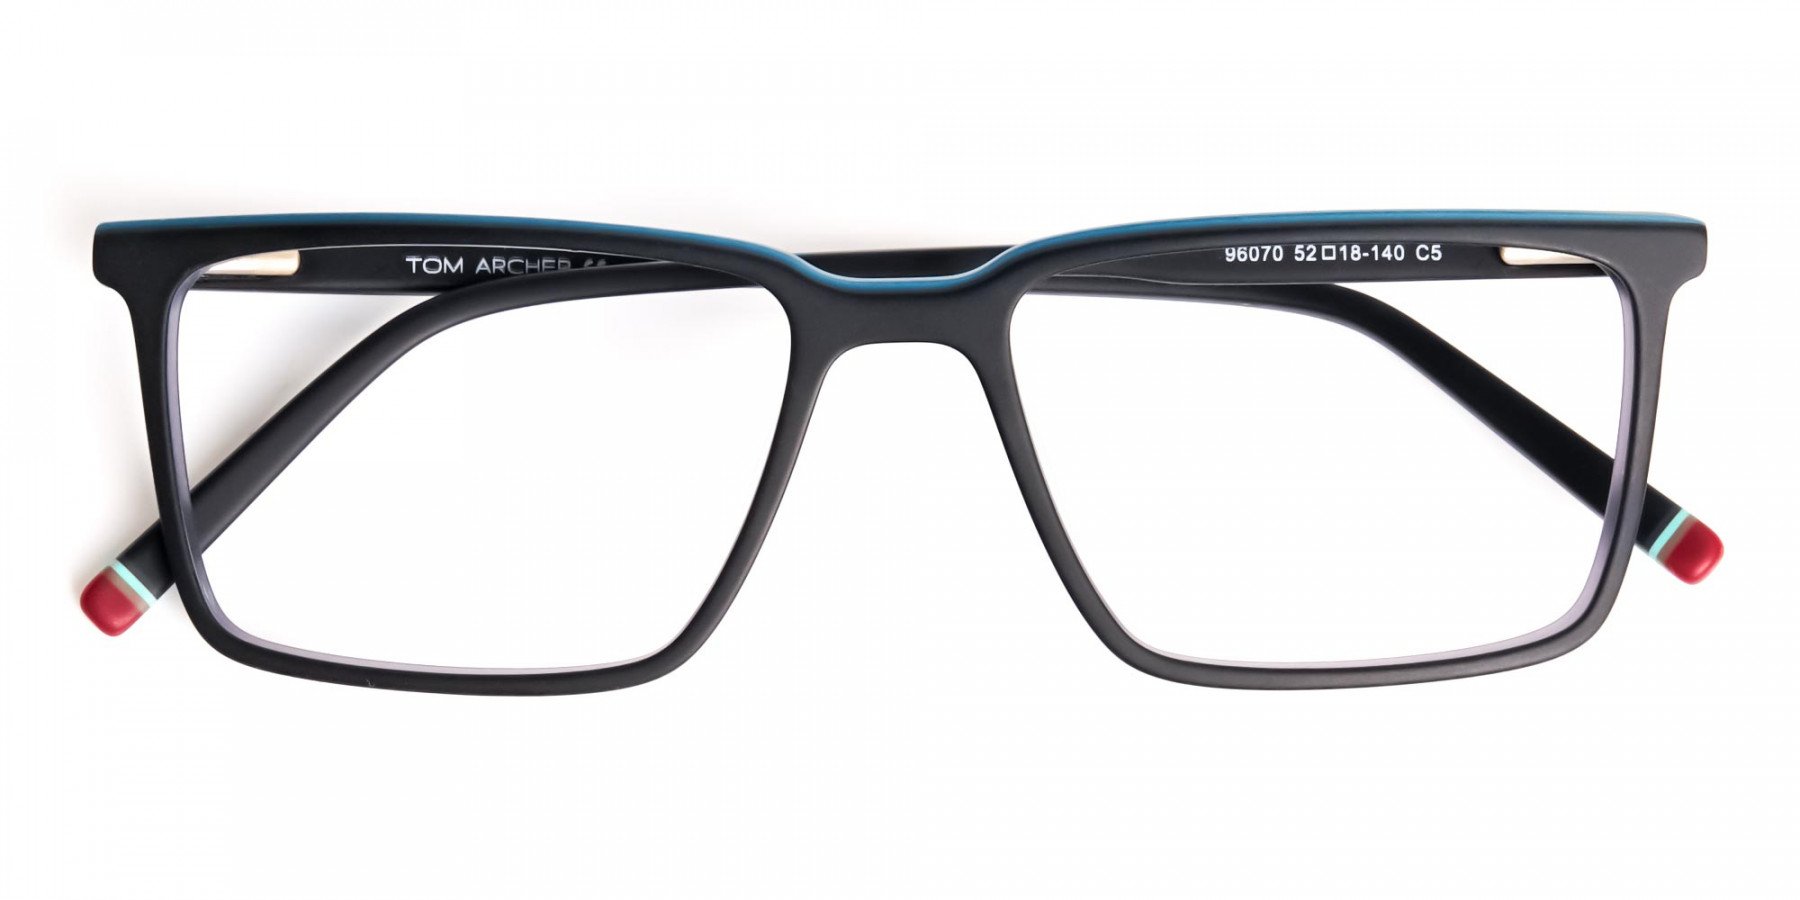 black-and-teal-rectangular-glasses-frames-1